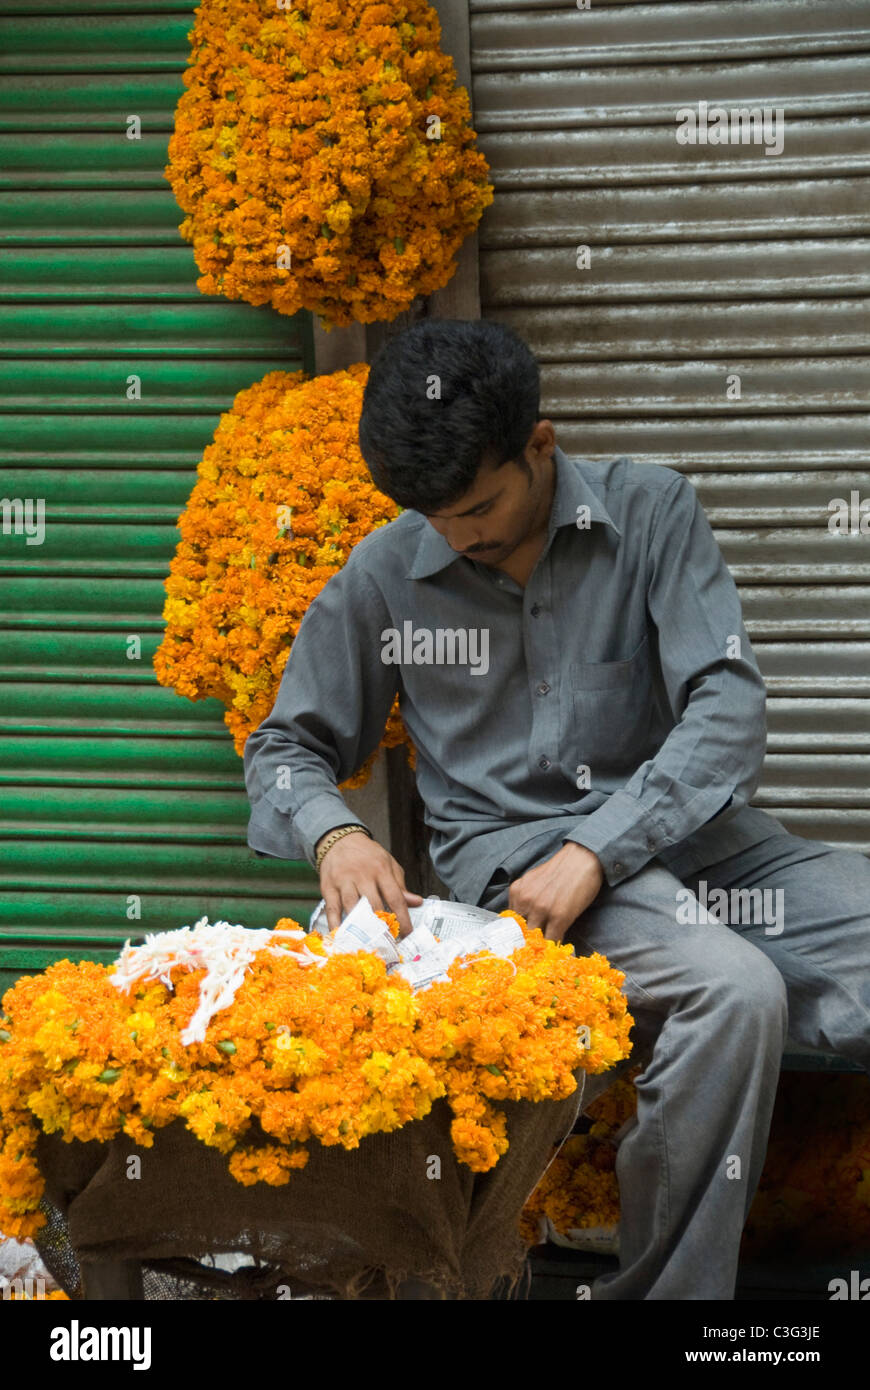 Florist selling garlands at a street market, Chandni Chowk, Delhi, India Stock Photo